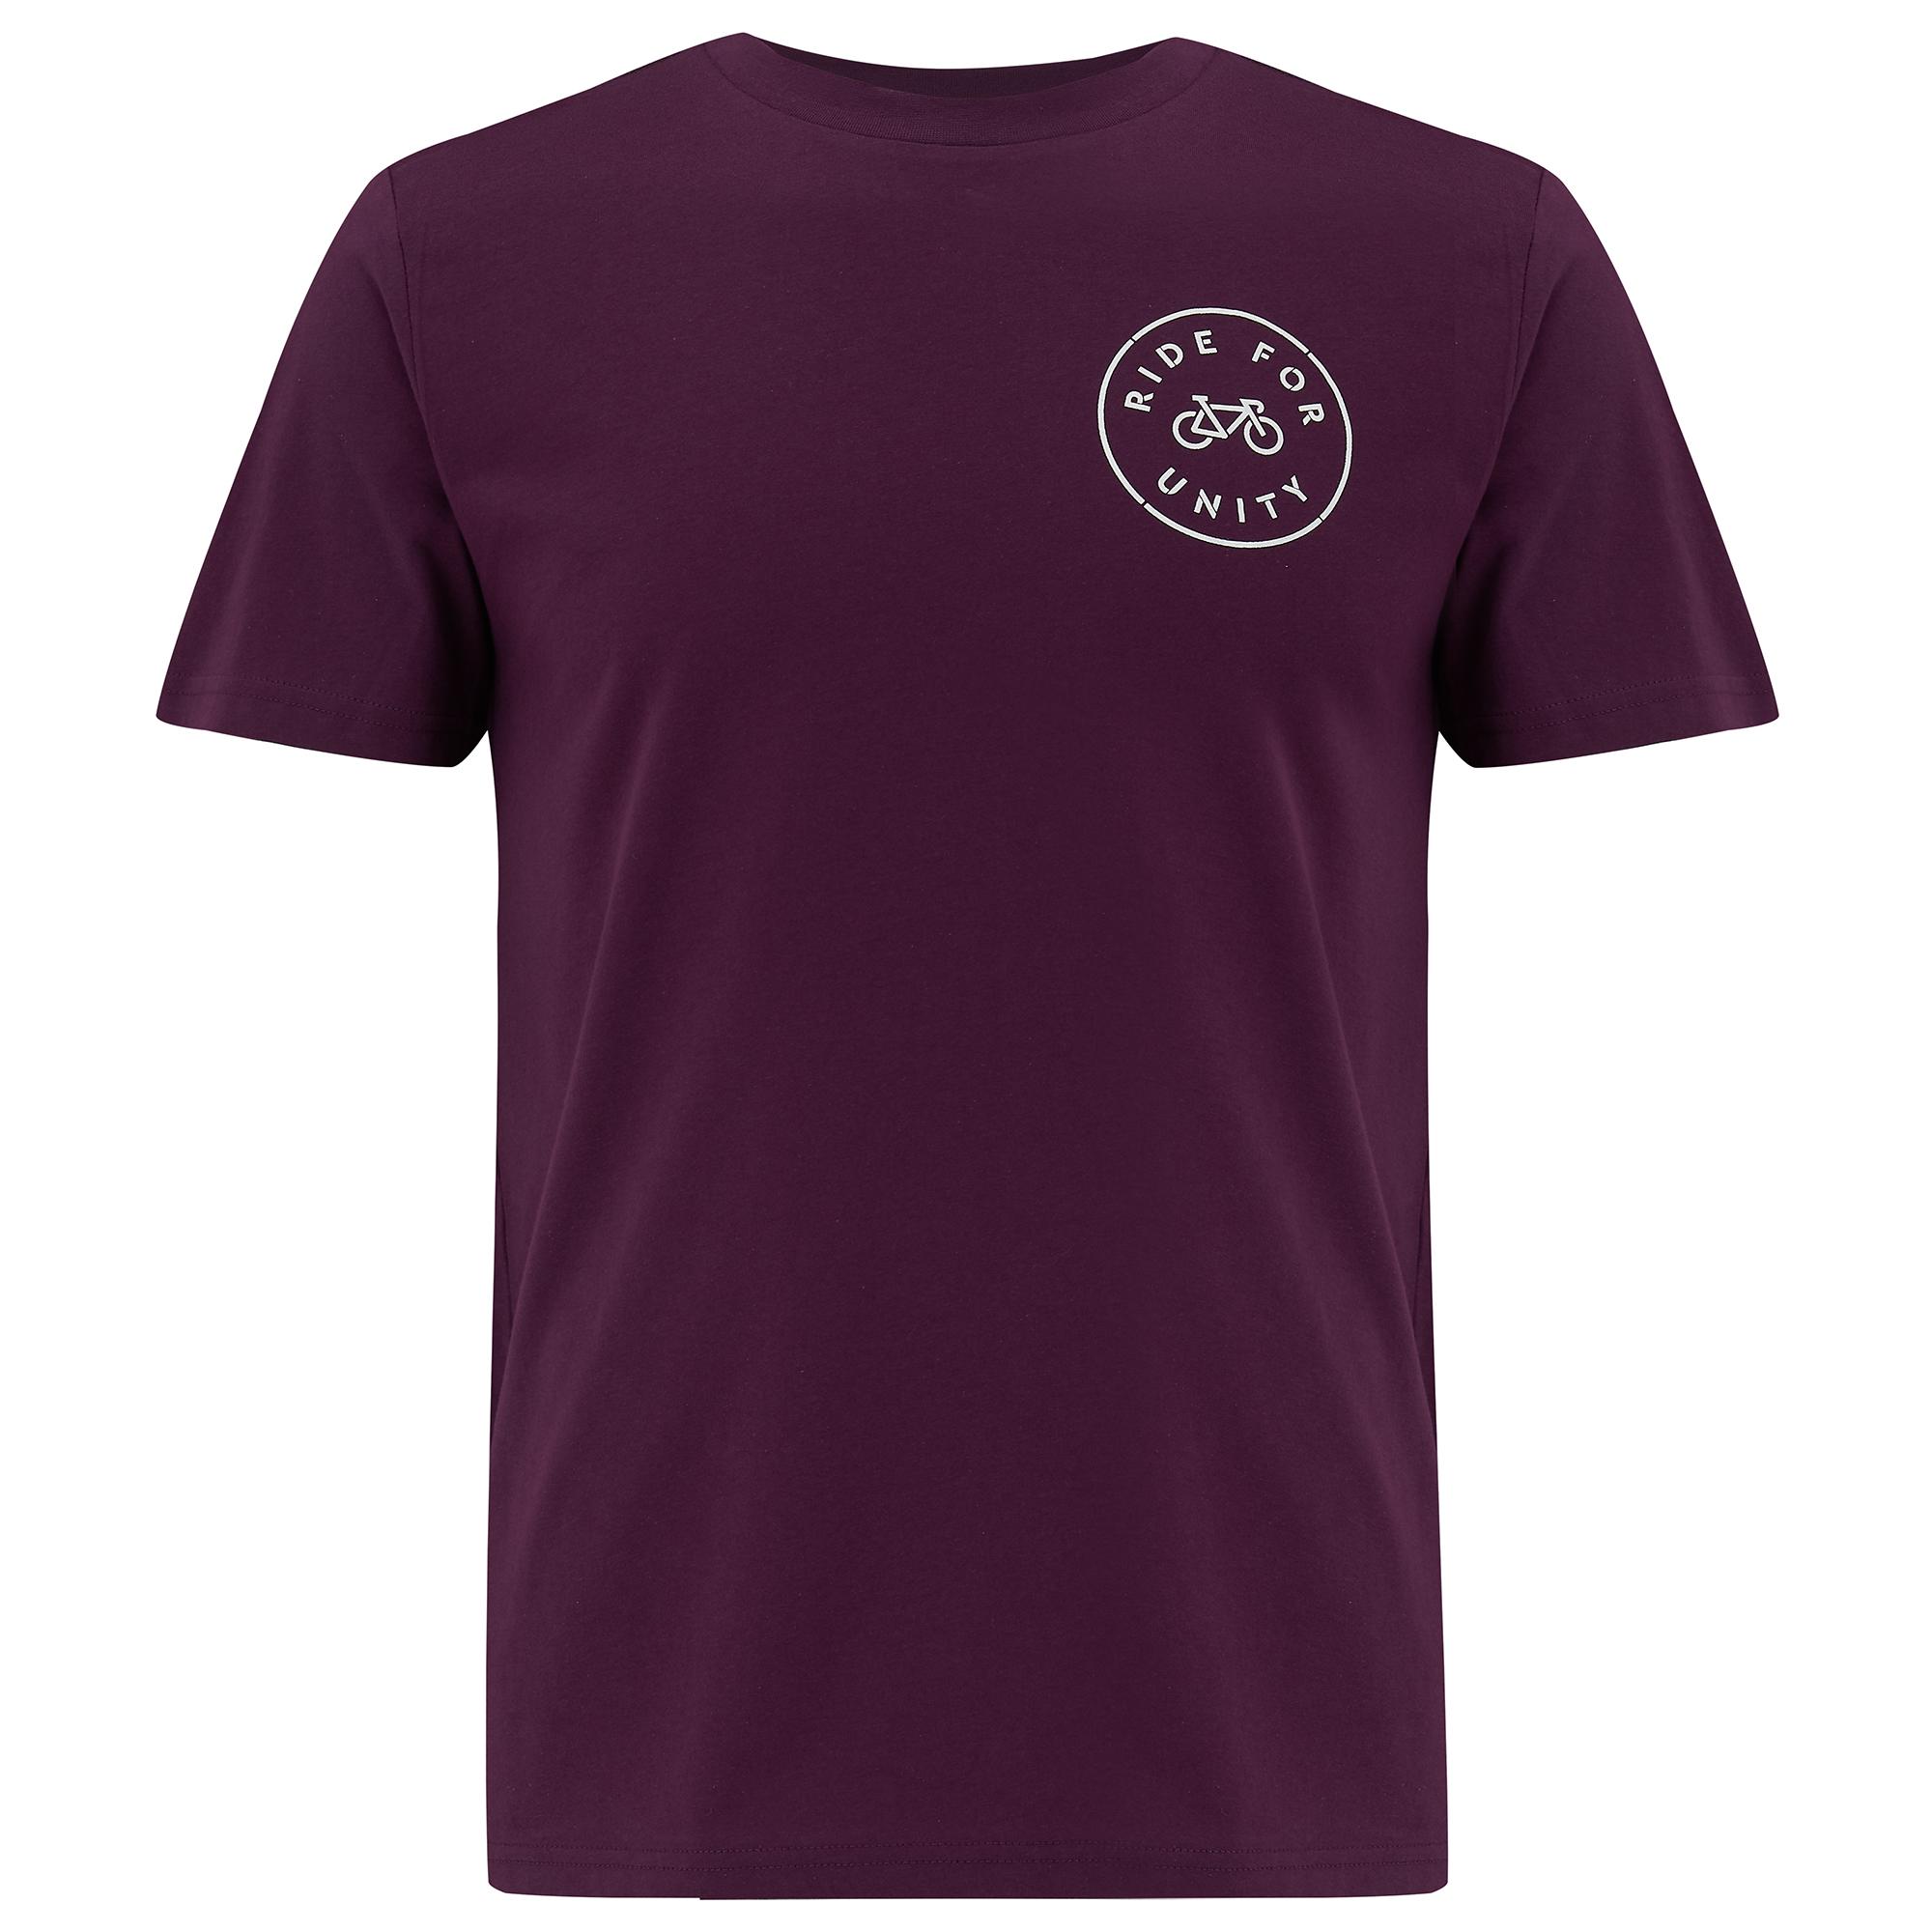 Dhb Ride For Unity T-shirt  Burgundy